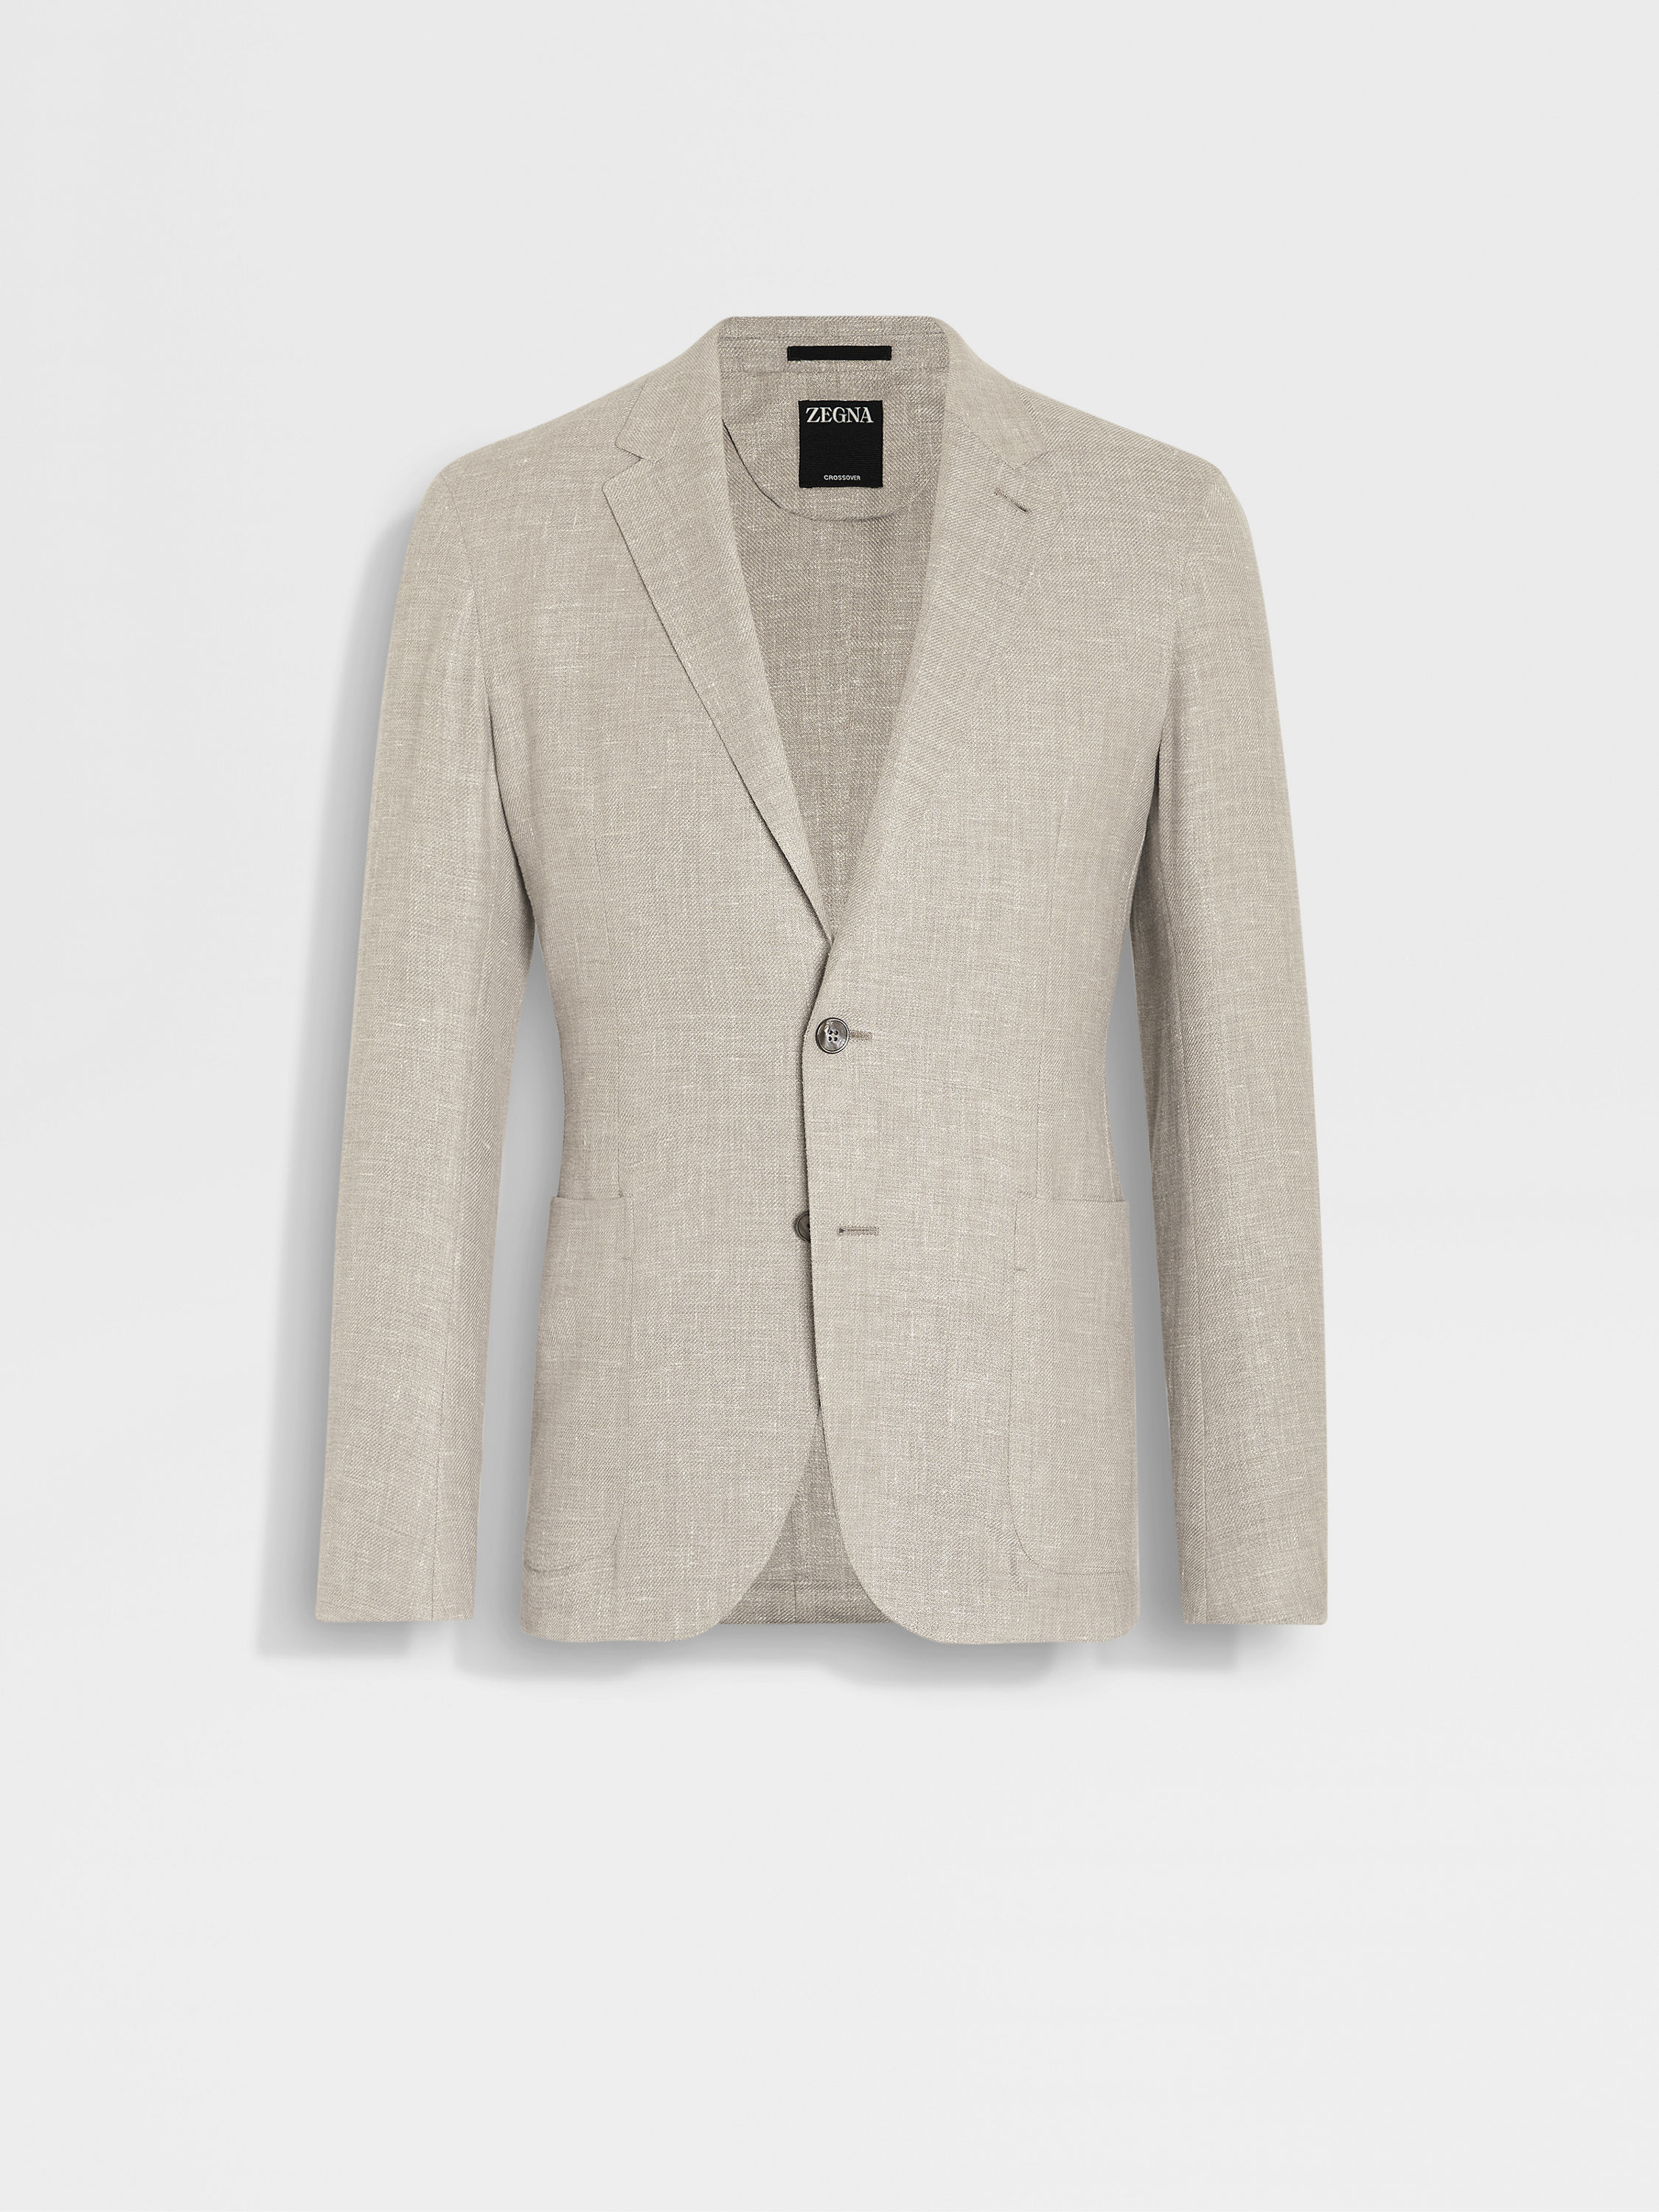 Dark Beige Crossover Linen Wool and Silk Blend Shirt Jacket